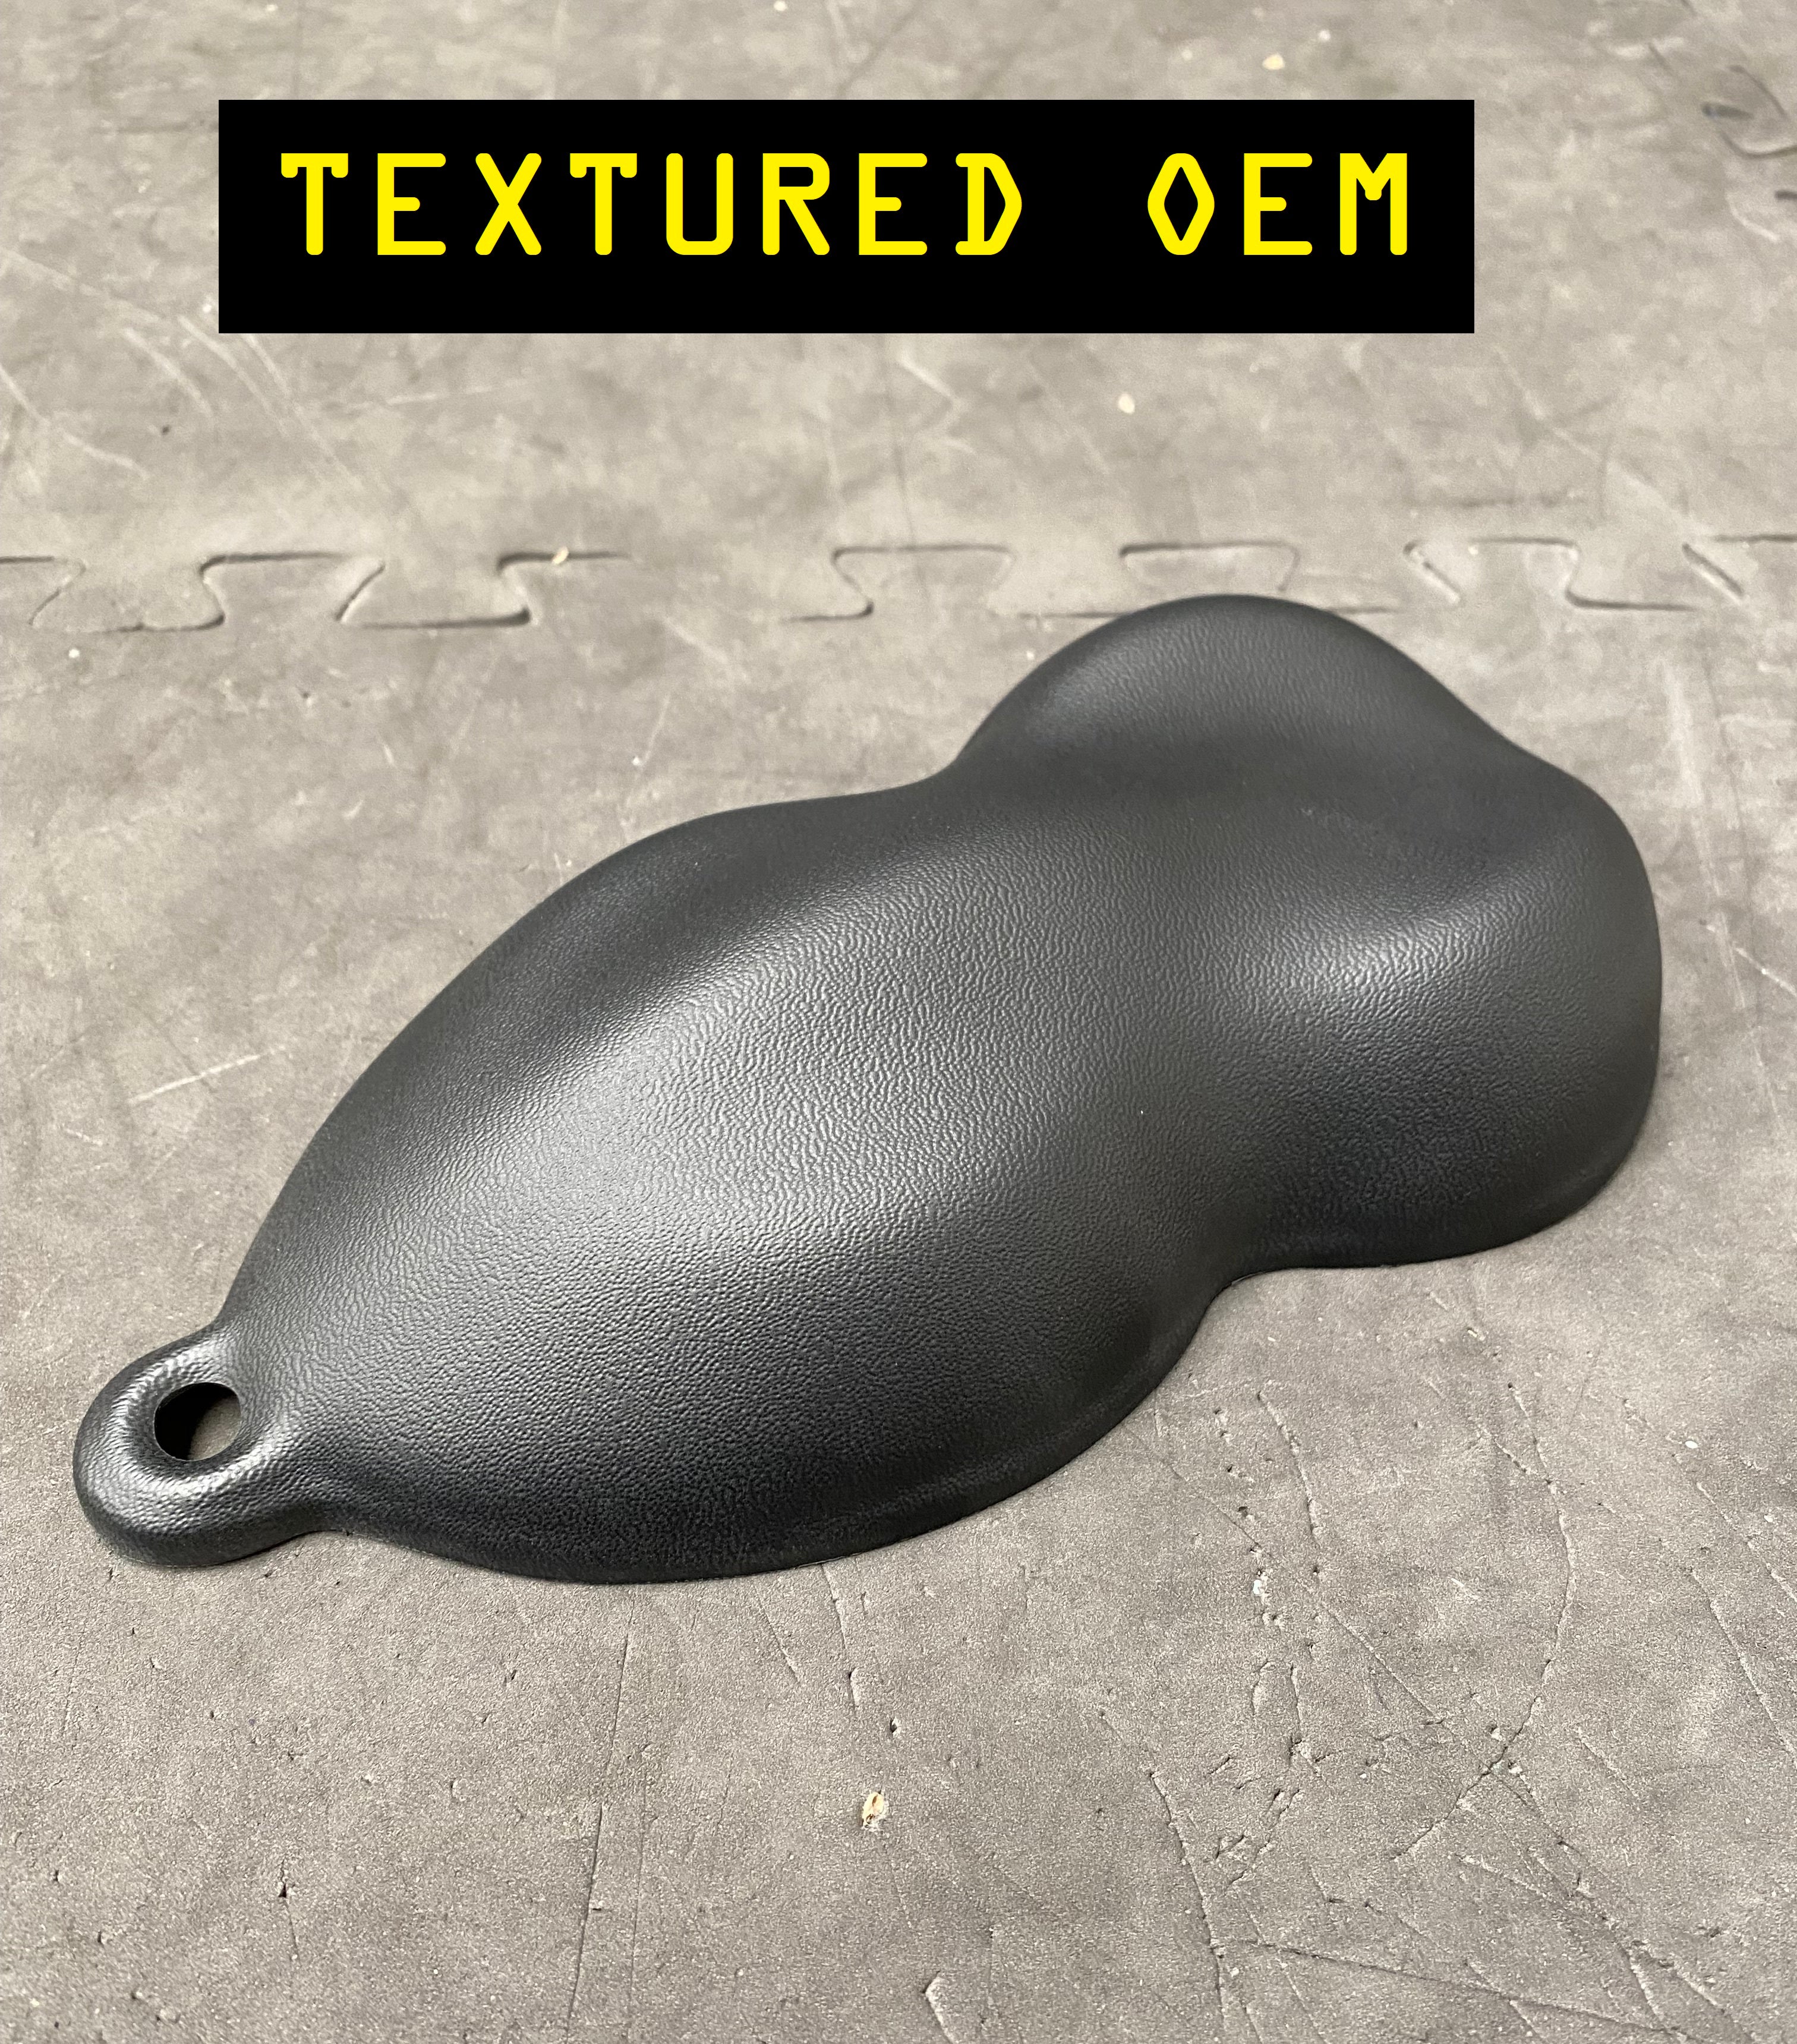 Proform Engine Cap Cover Kit - Vauxhall / Opel Corsa D inc VXR (Plastic Finishes)